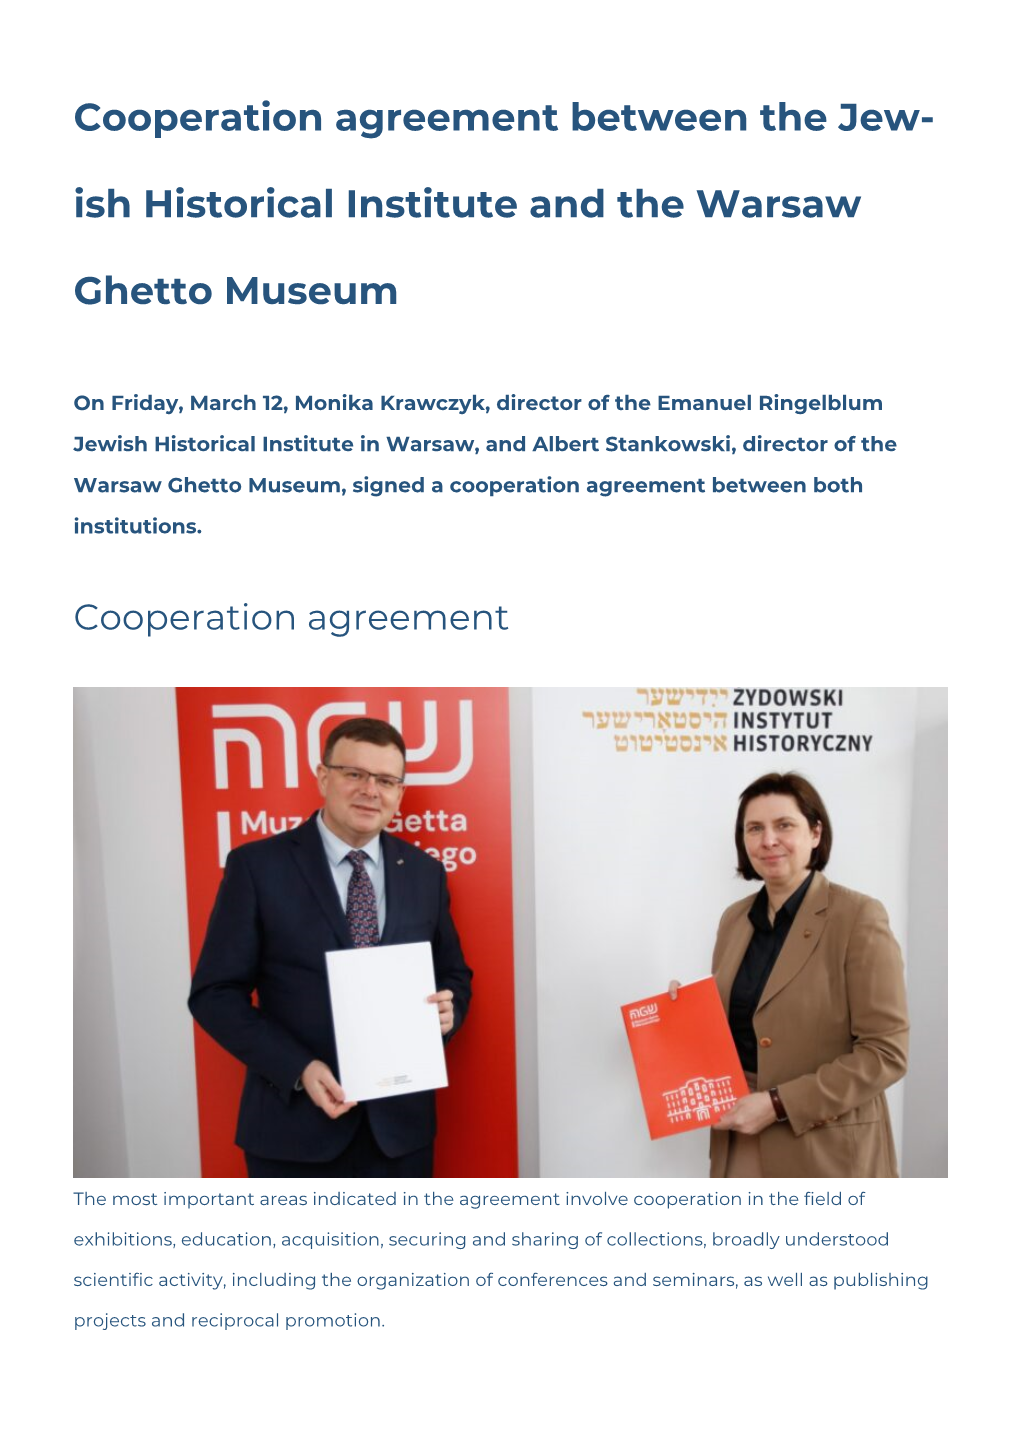 Cooperation Agreement Between the Emanuel Ringelblum Jewish